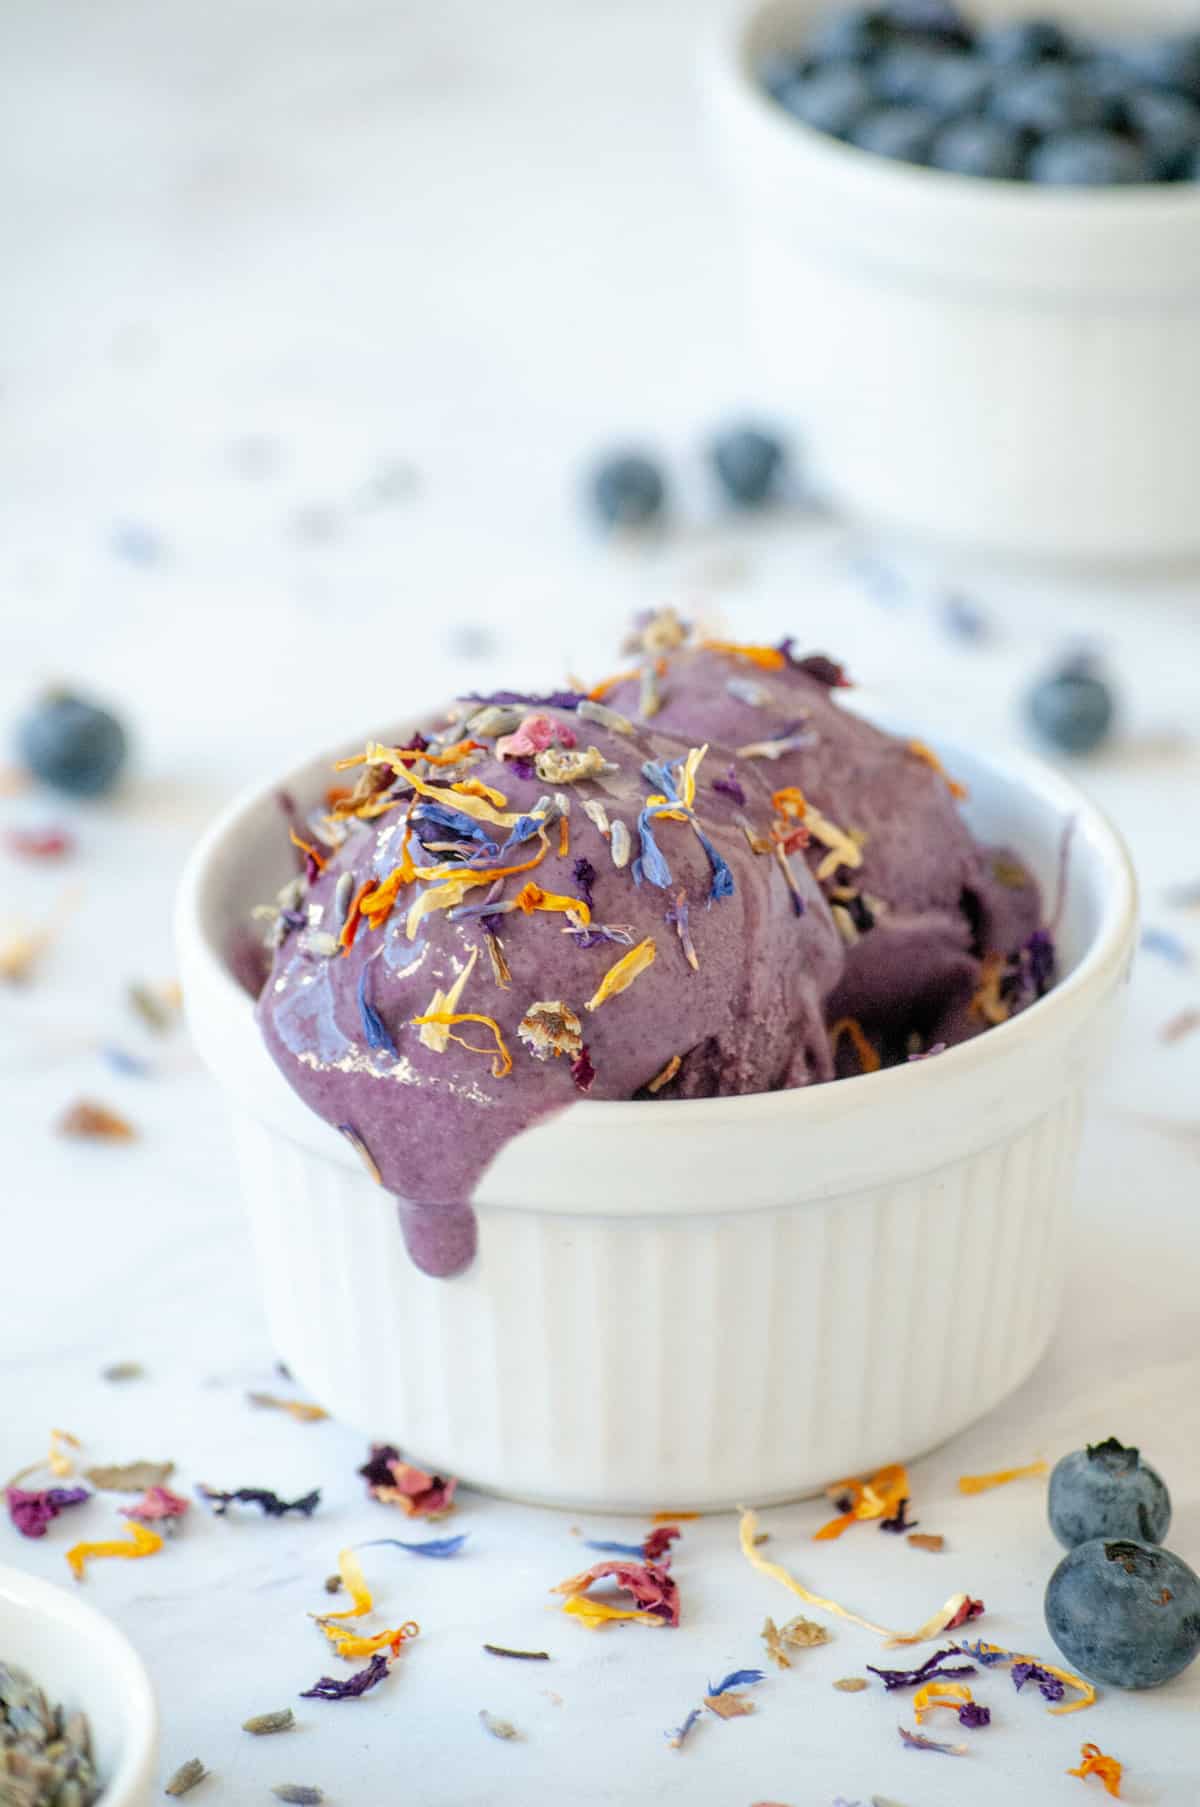 Blueberry lavender ice cream